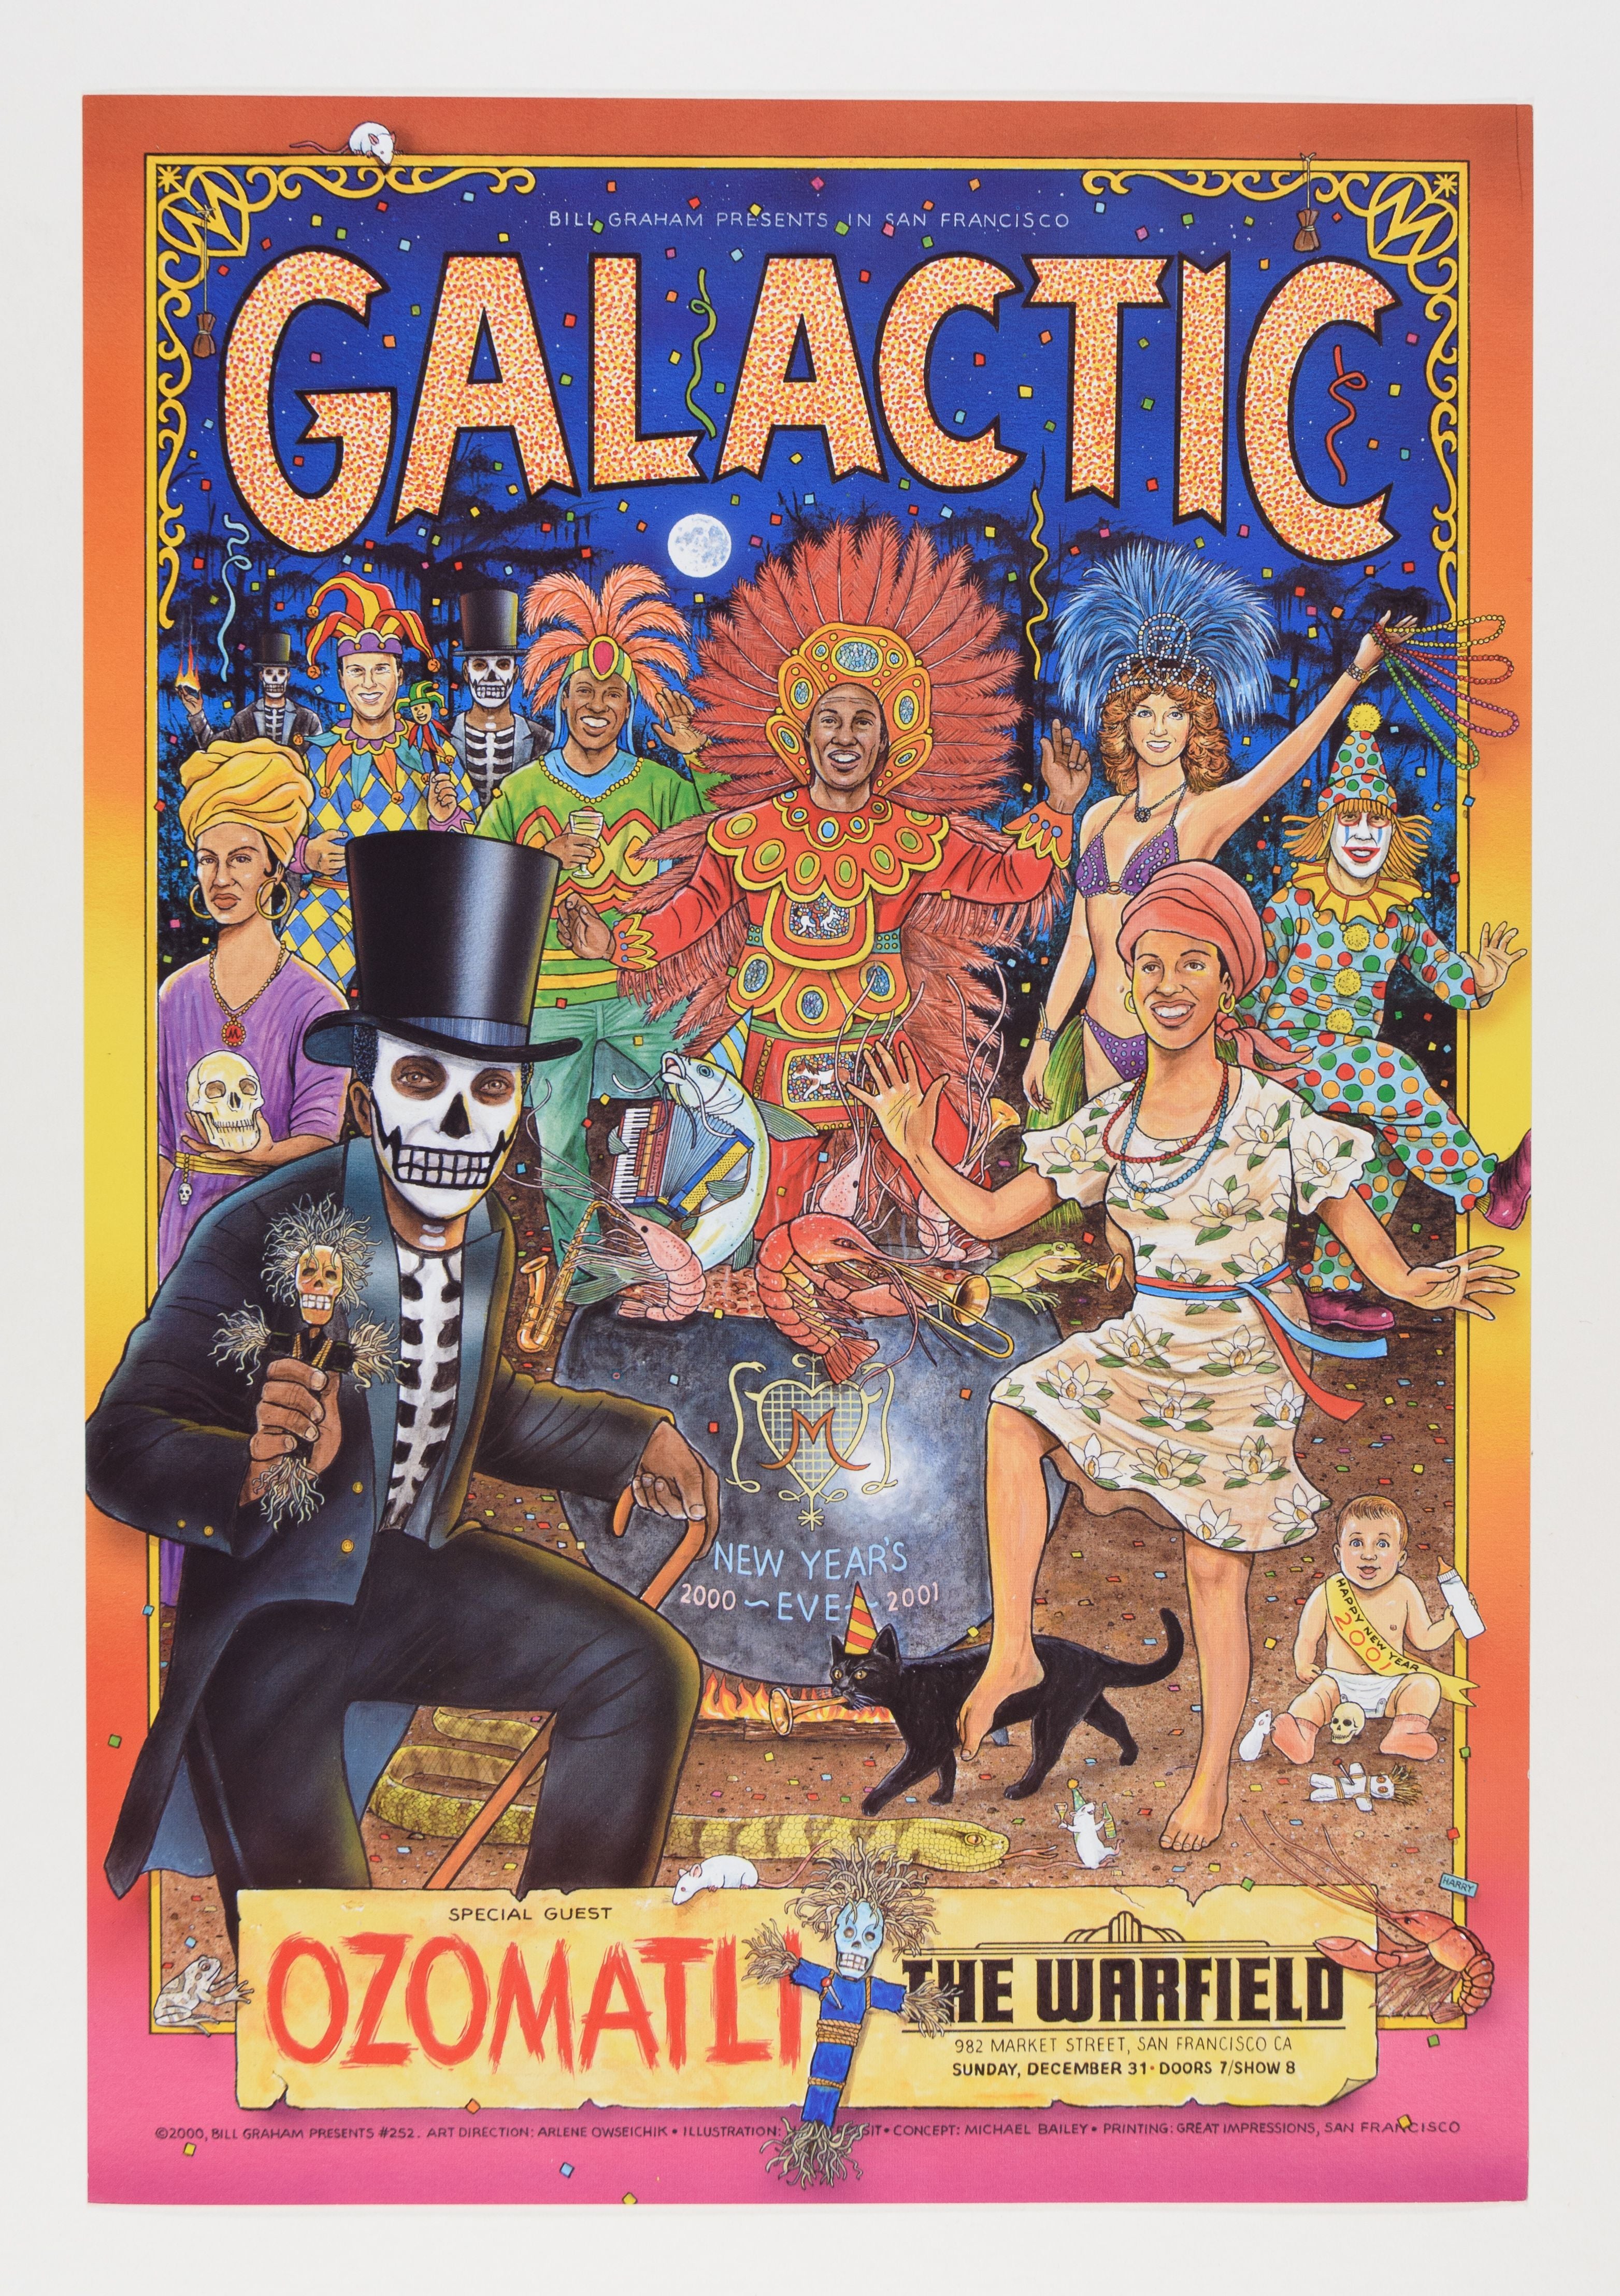 2000-Galactic Concert Poster-The Fillmore-San Francisco, CA